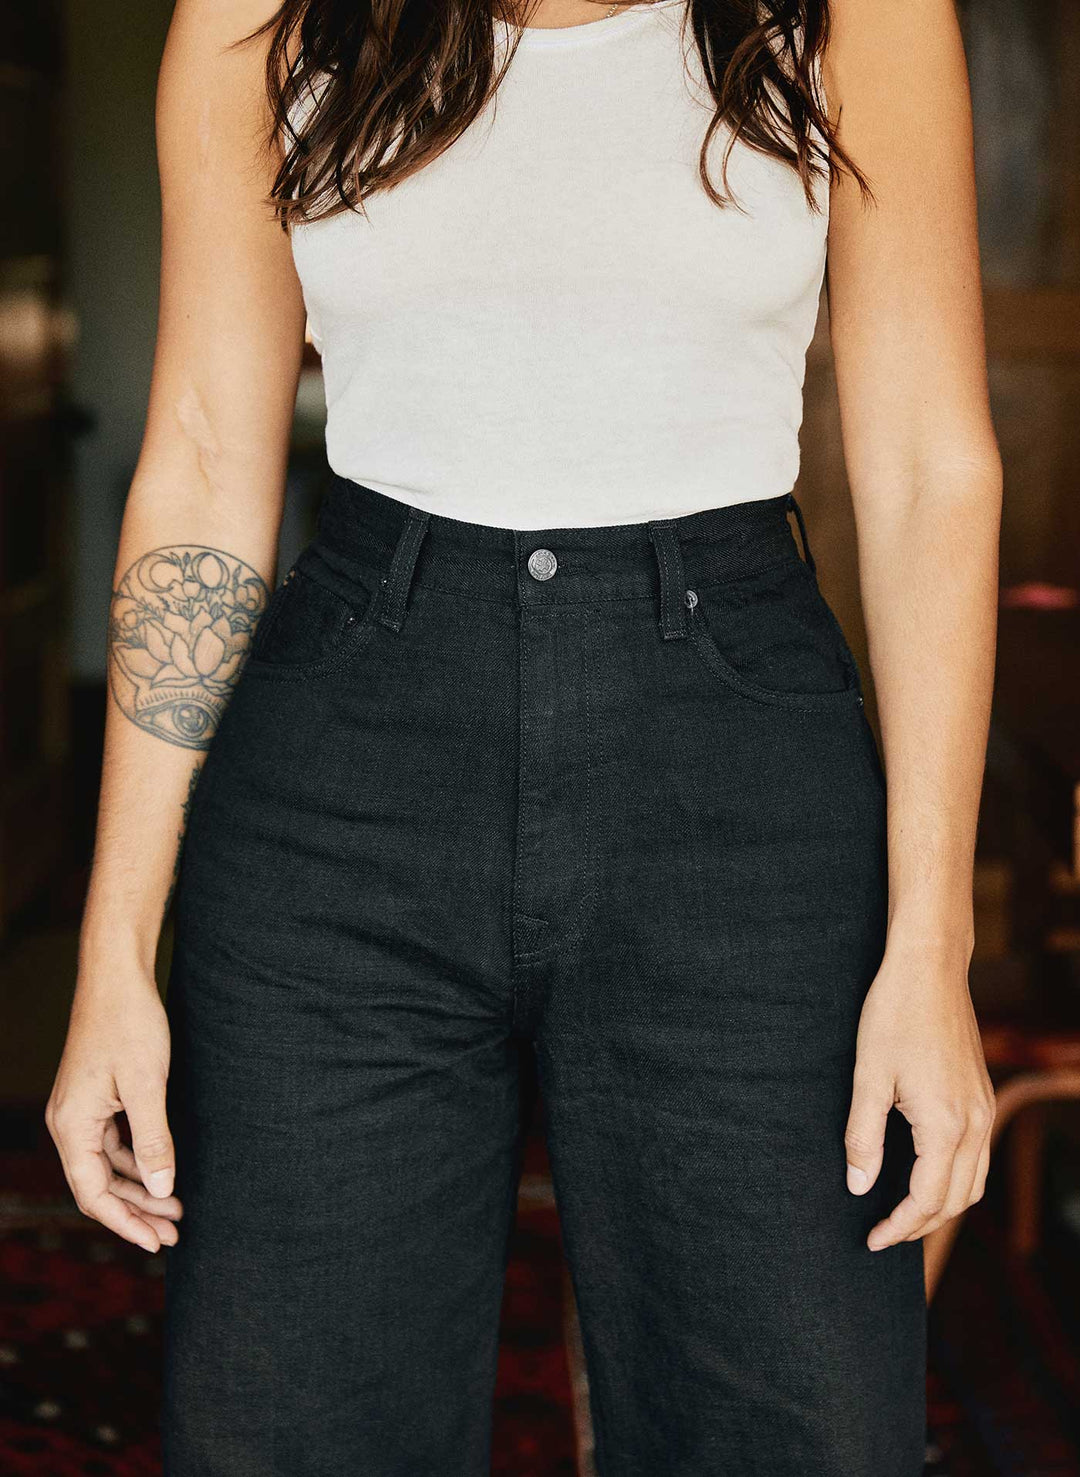 a woman wearing black jeans